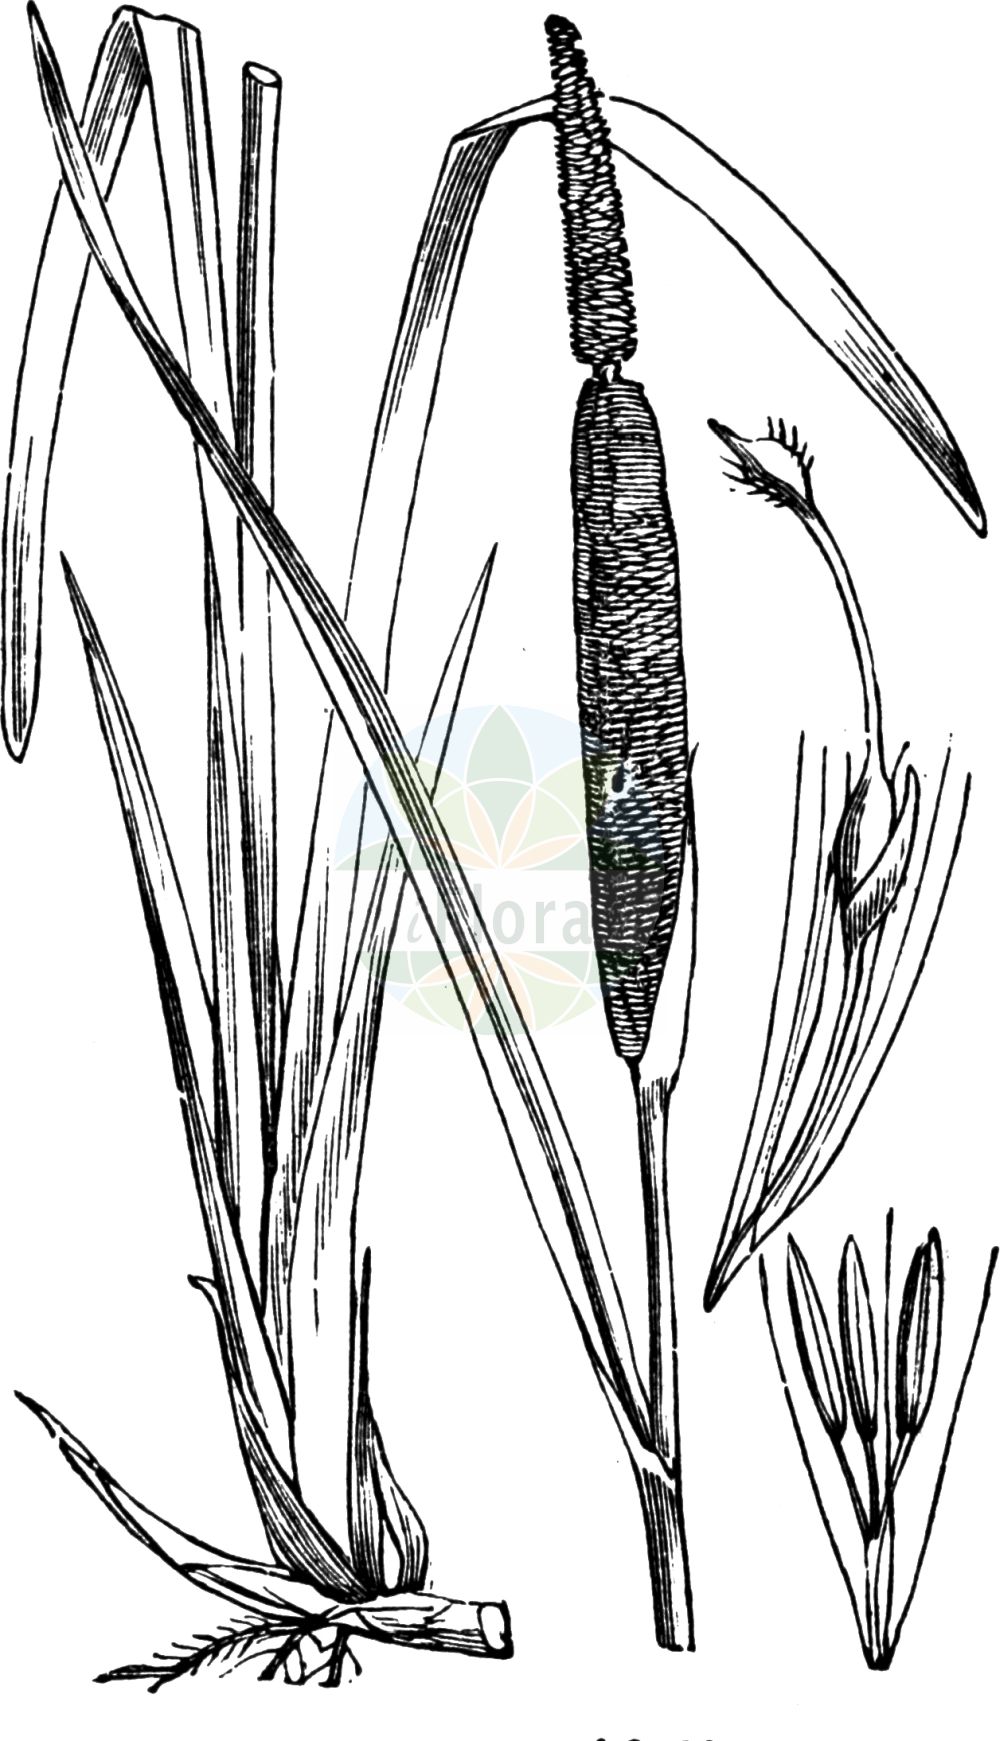 Historische Abbildung von Typha latifolia (Breitblättriger Rohrkolben - Bulrush). Das Bild zeigt Blatt, Bluete, Frucht und Same. ---- Historical Drawing of Typha latifolia (Breitblättriger Rohrkolben - Bulrush). The image is showing leaf, flower, fruit and seed.(Typha latifolia,Breitblättriger Rohrkolben,Bulrush,Typha caspica,Typha latifolia,Typha sibirica,Breitblaettriger Rohrkolben,Bulrush,Cattail,Broad-leaved Reed Mace,Broadleaf Cattail,Common Cat-tail,Great Reedmace,Poker Plant,Typha,Rohrkolben,Cattail,Typhaceae,Rohrkolbengewächse,Bur-reed family,Blatt,Bluete,Frucht,Same,leaf,flower,fruit,seed,Fitch et al. (1880))